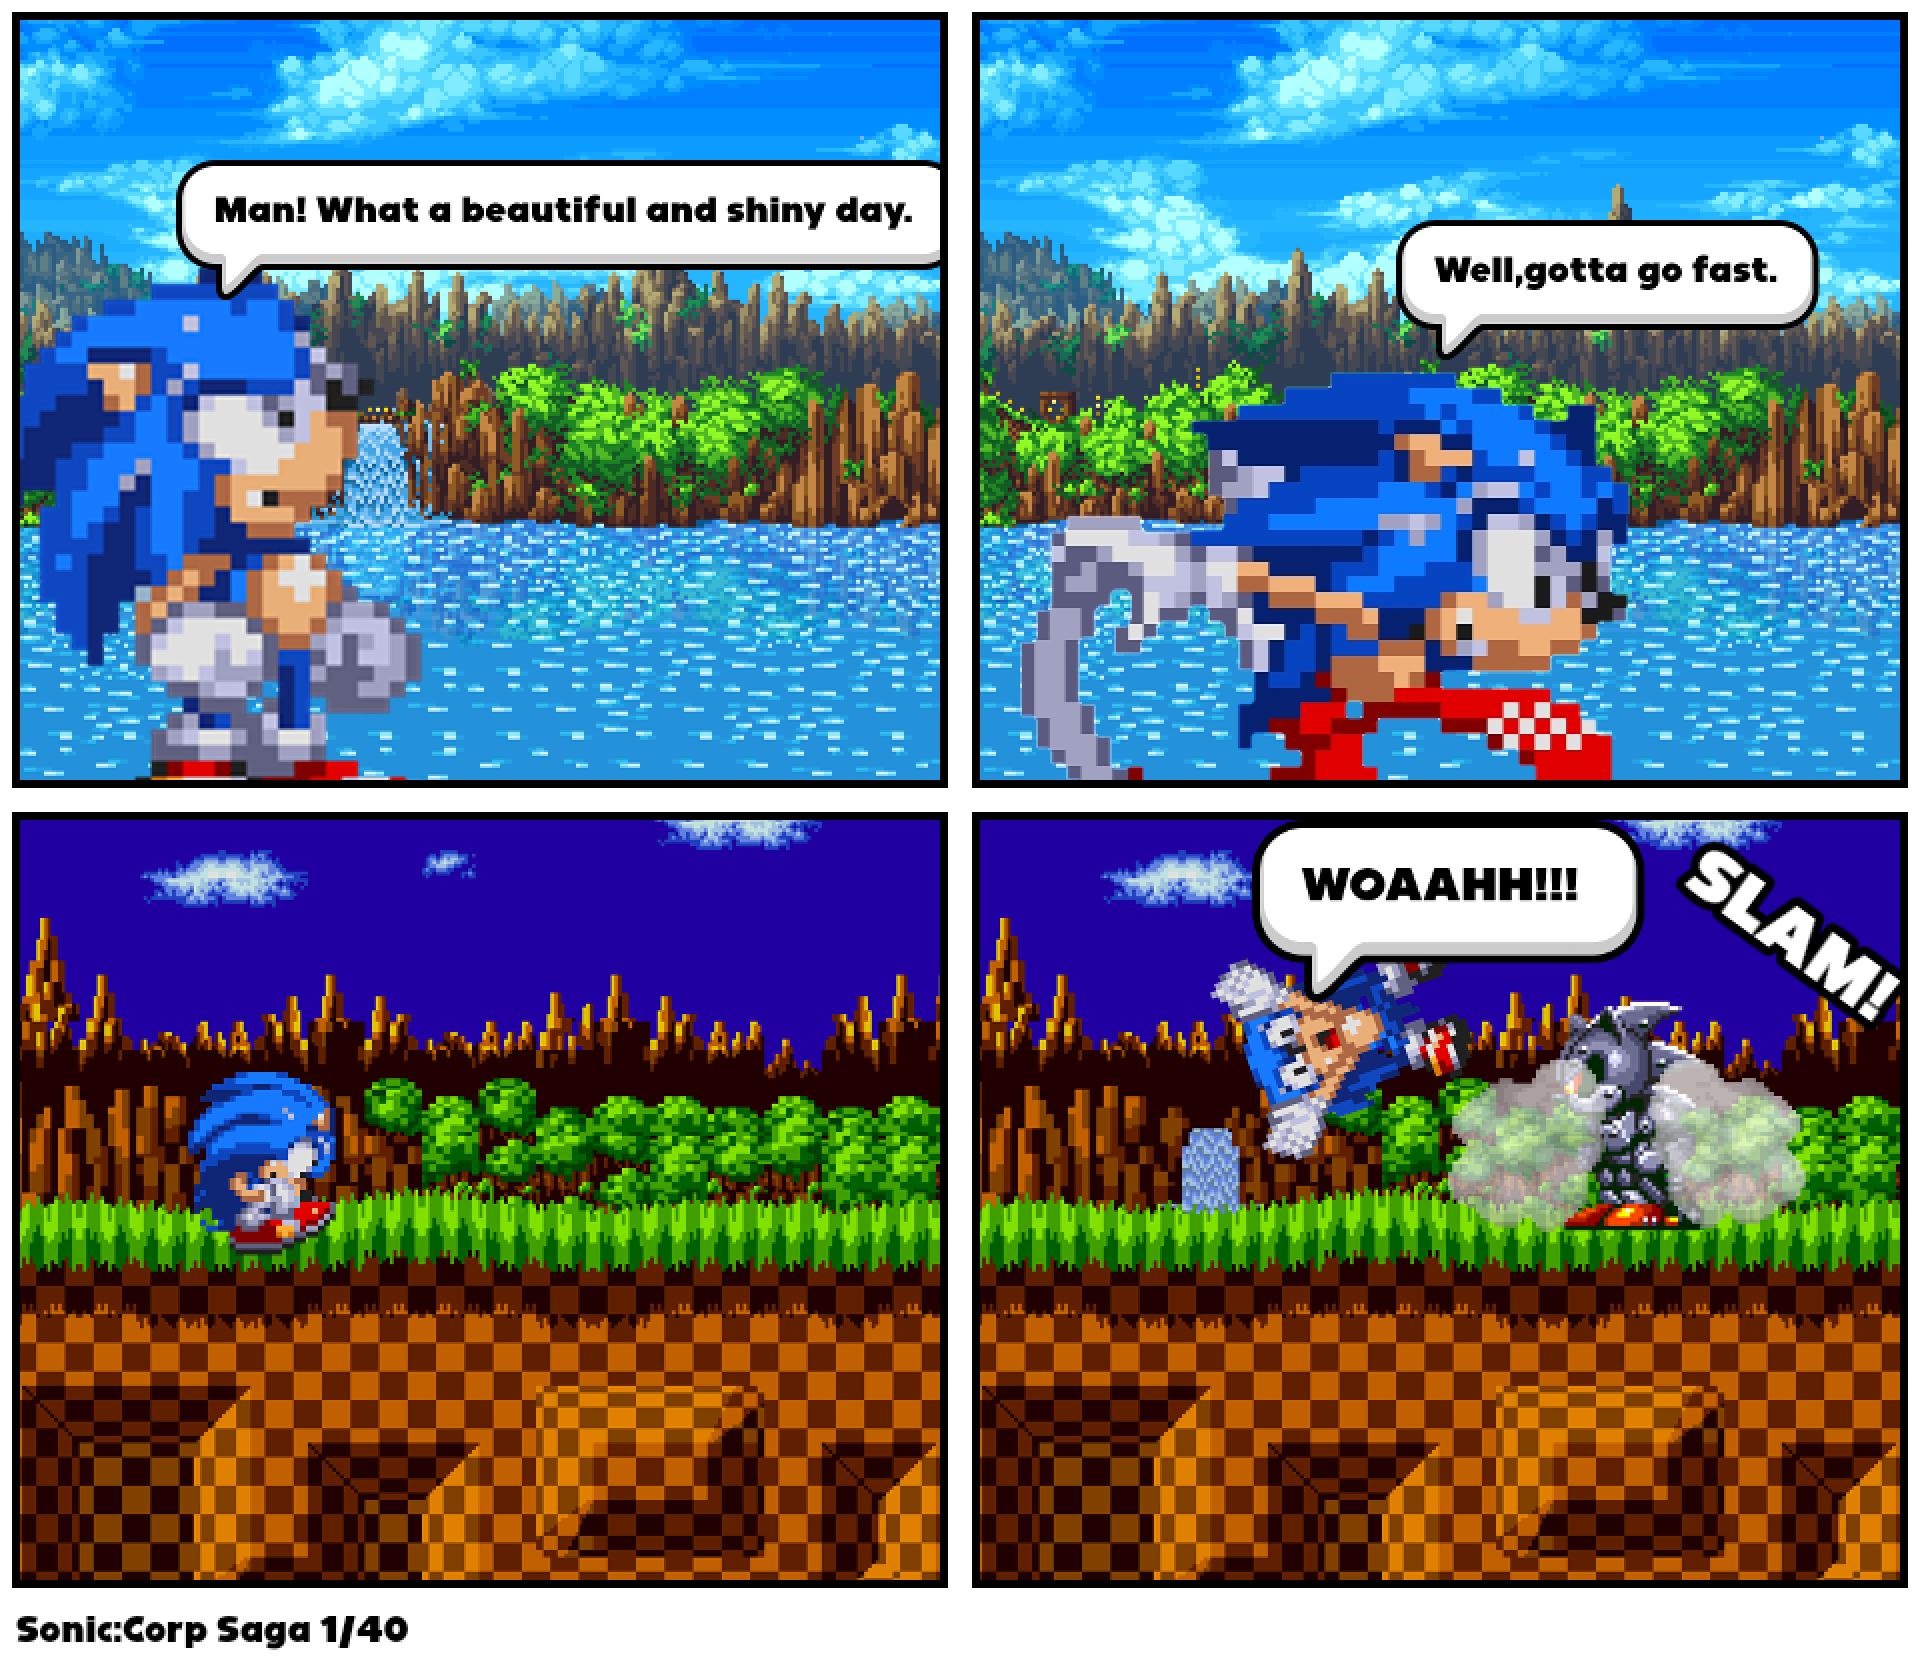 Sonic:Corp Saga 1/40